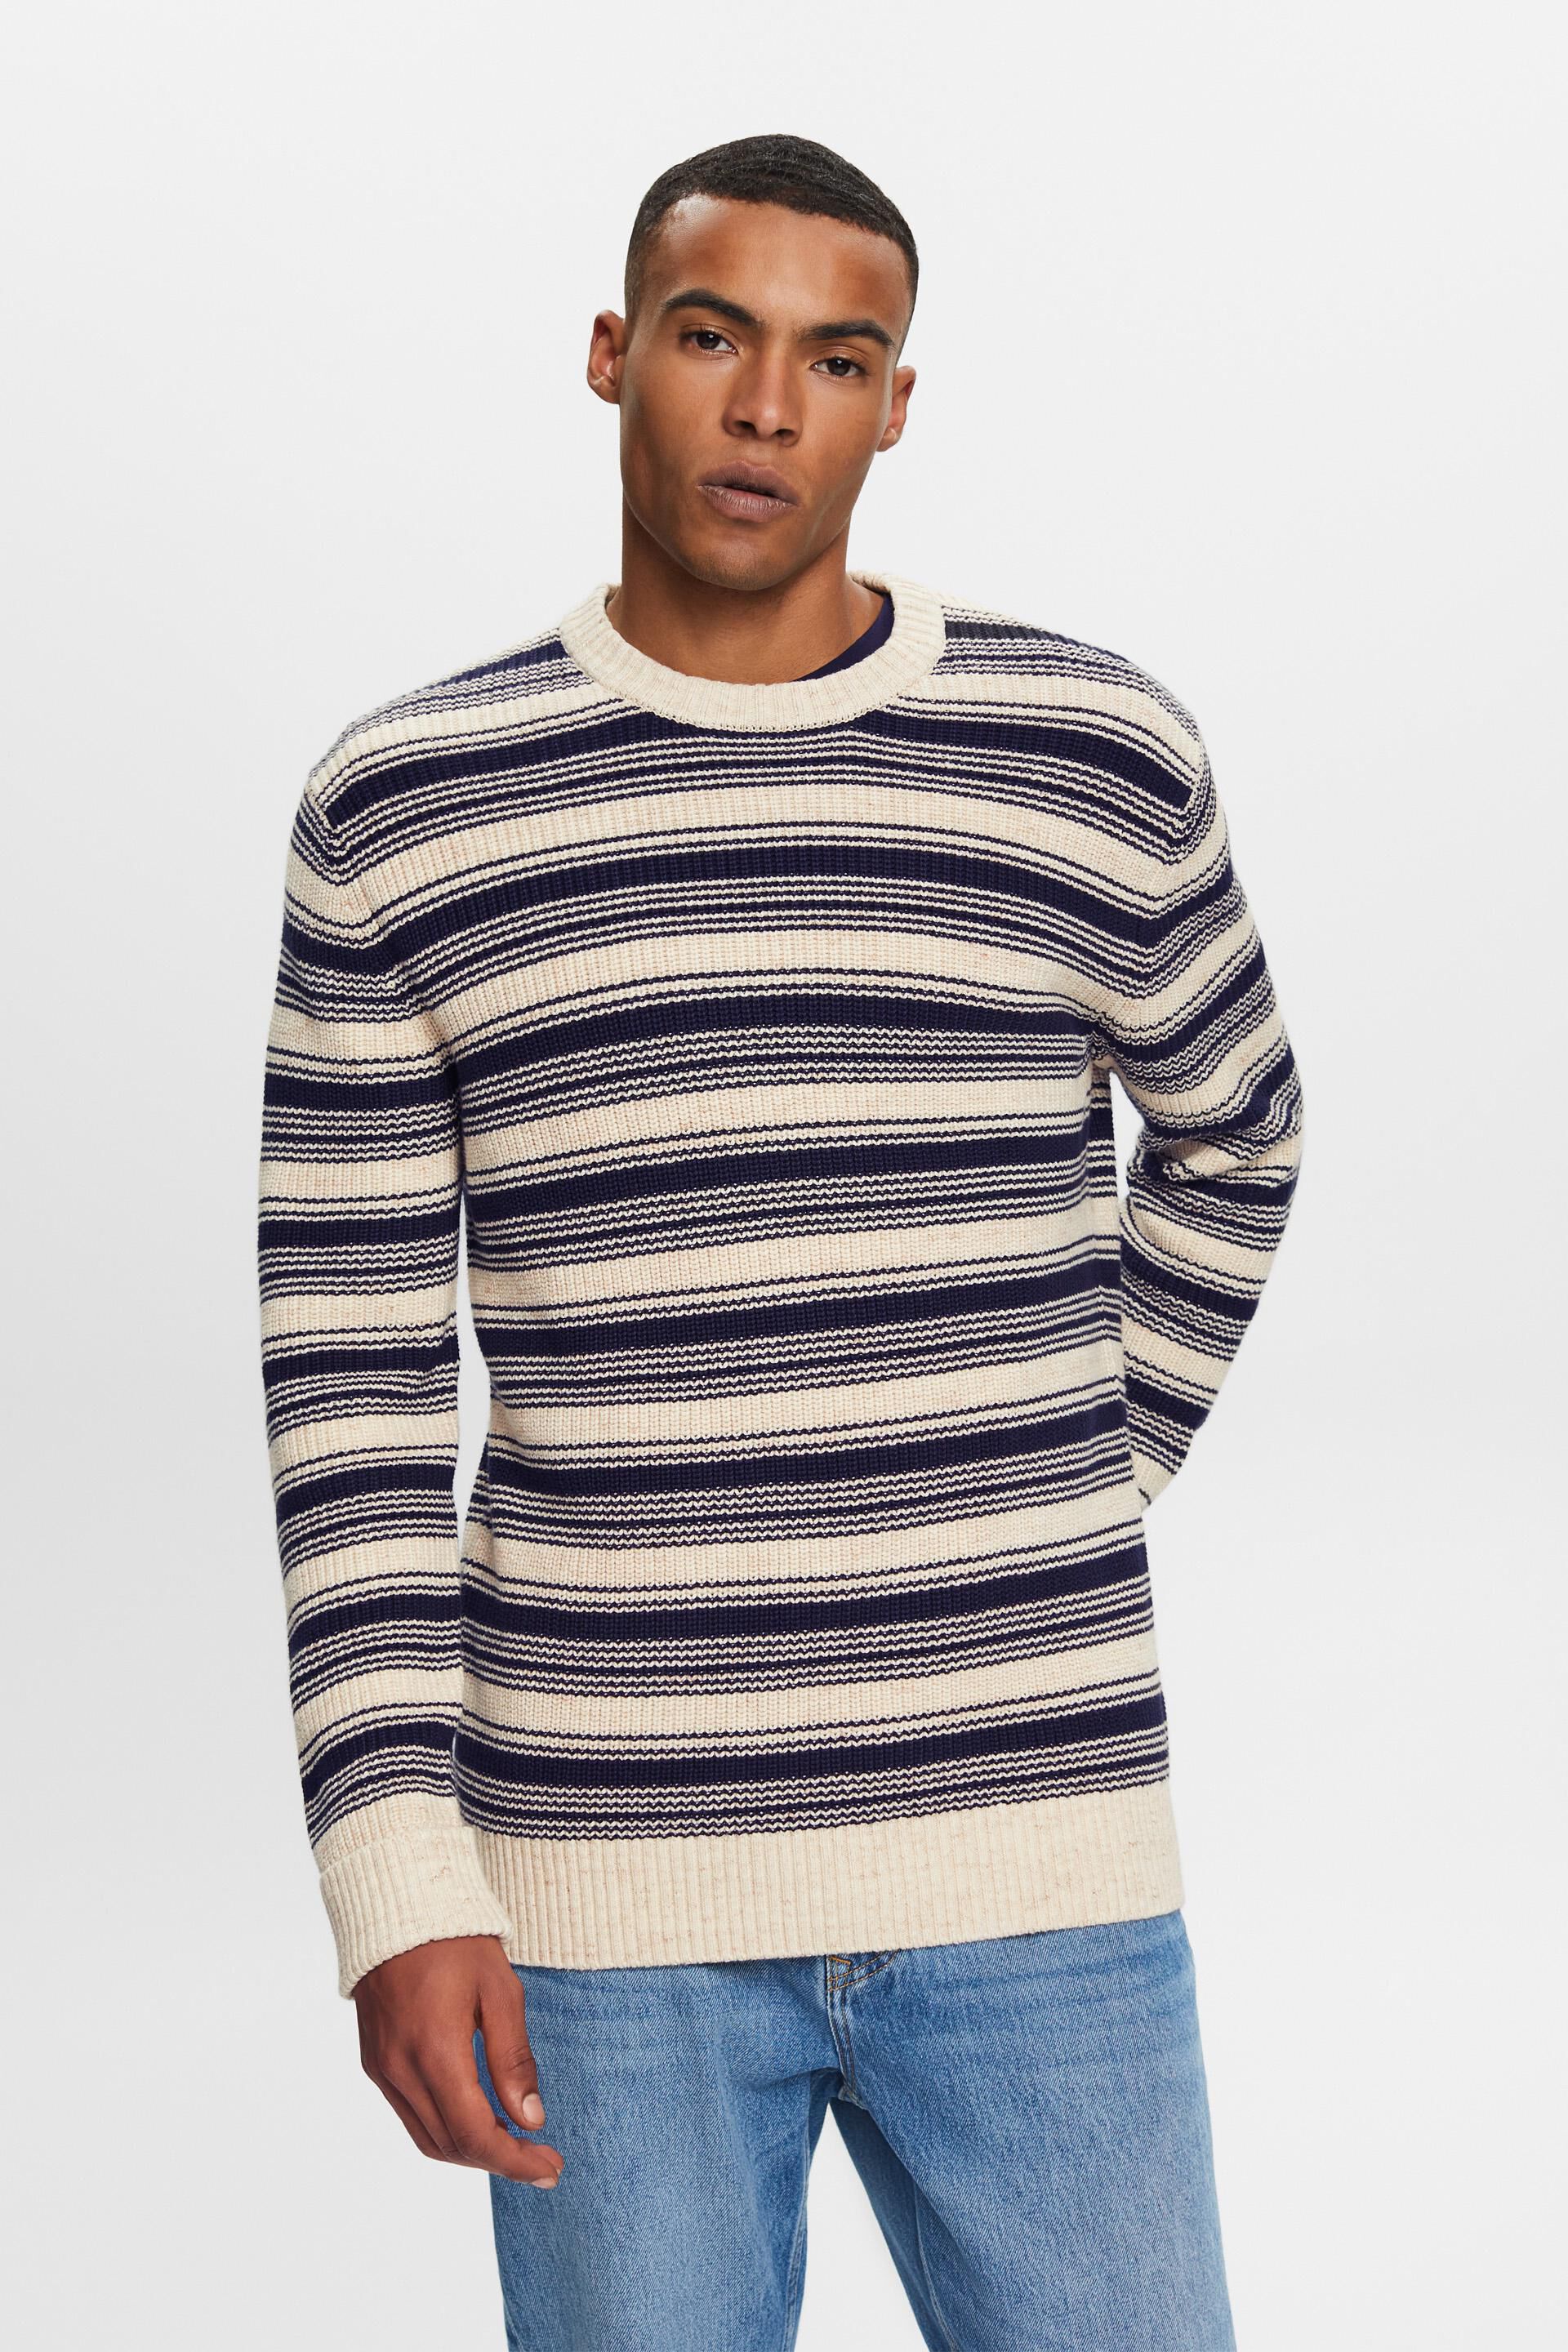 Esprit crewneck Striped 100% jumper, cotton